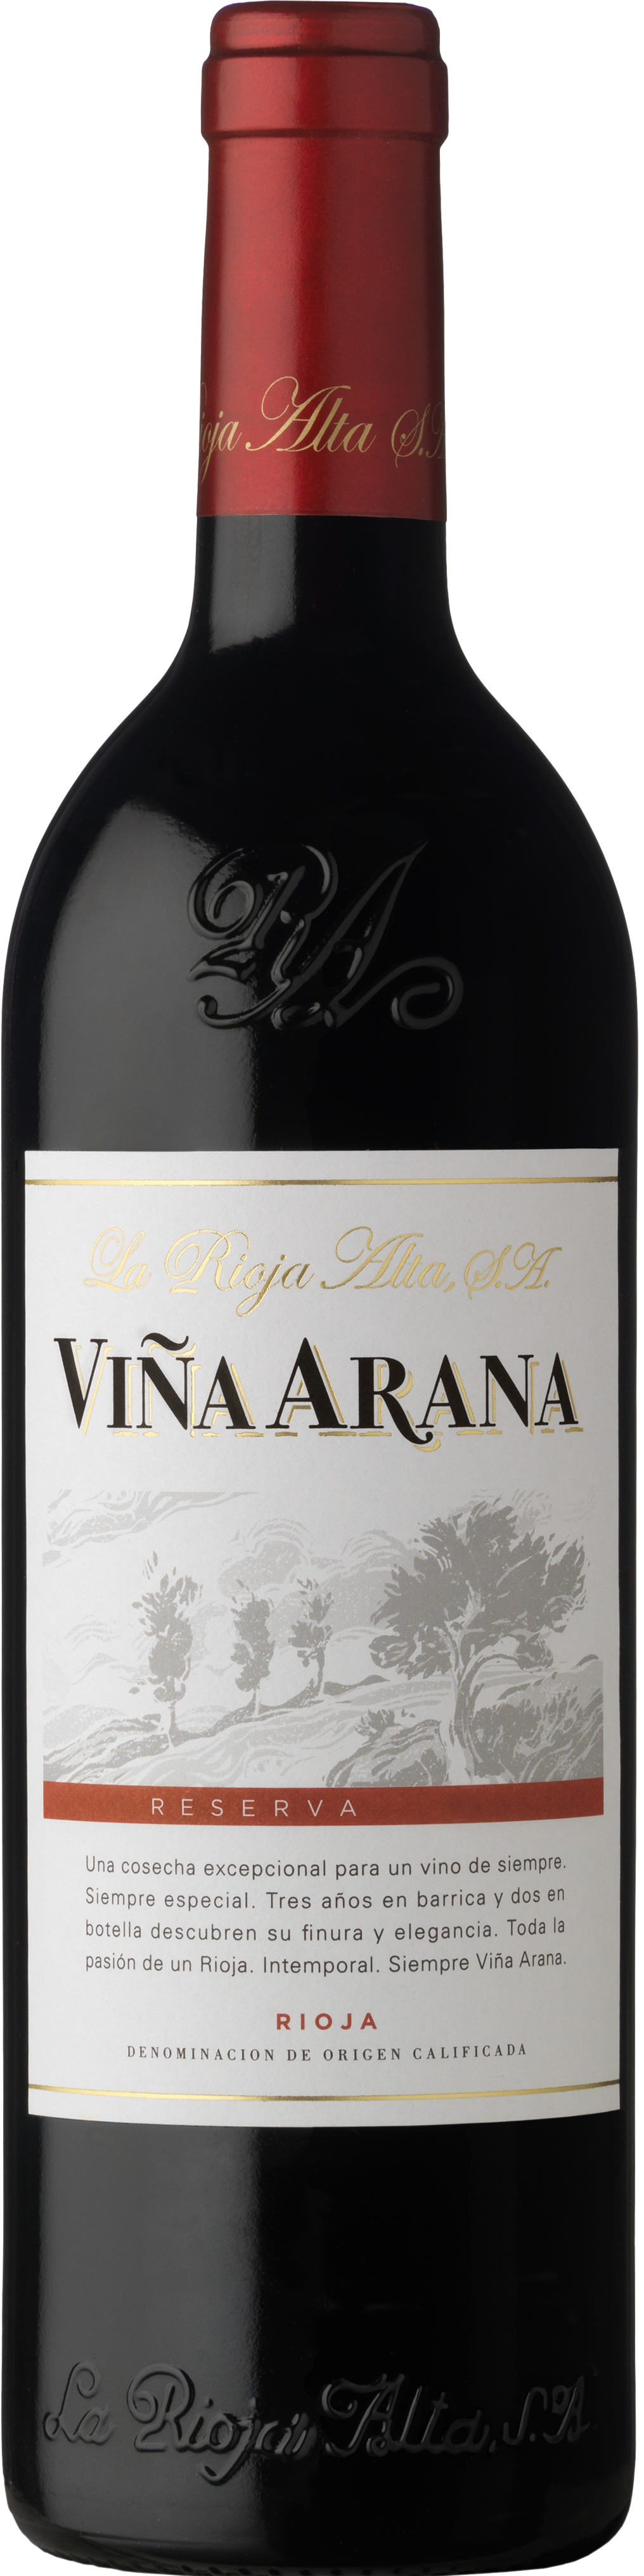 Bottle shot of 2005 Viña Arana Reserva